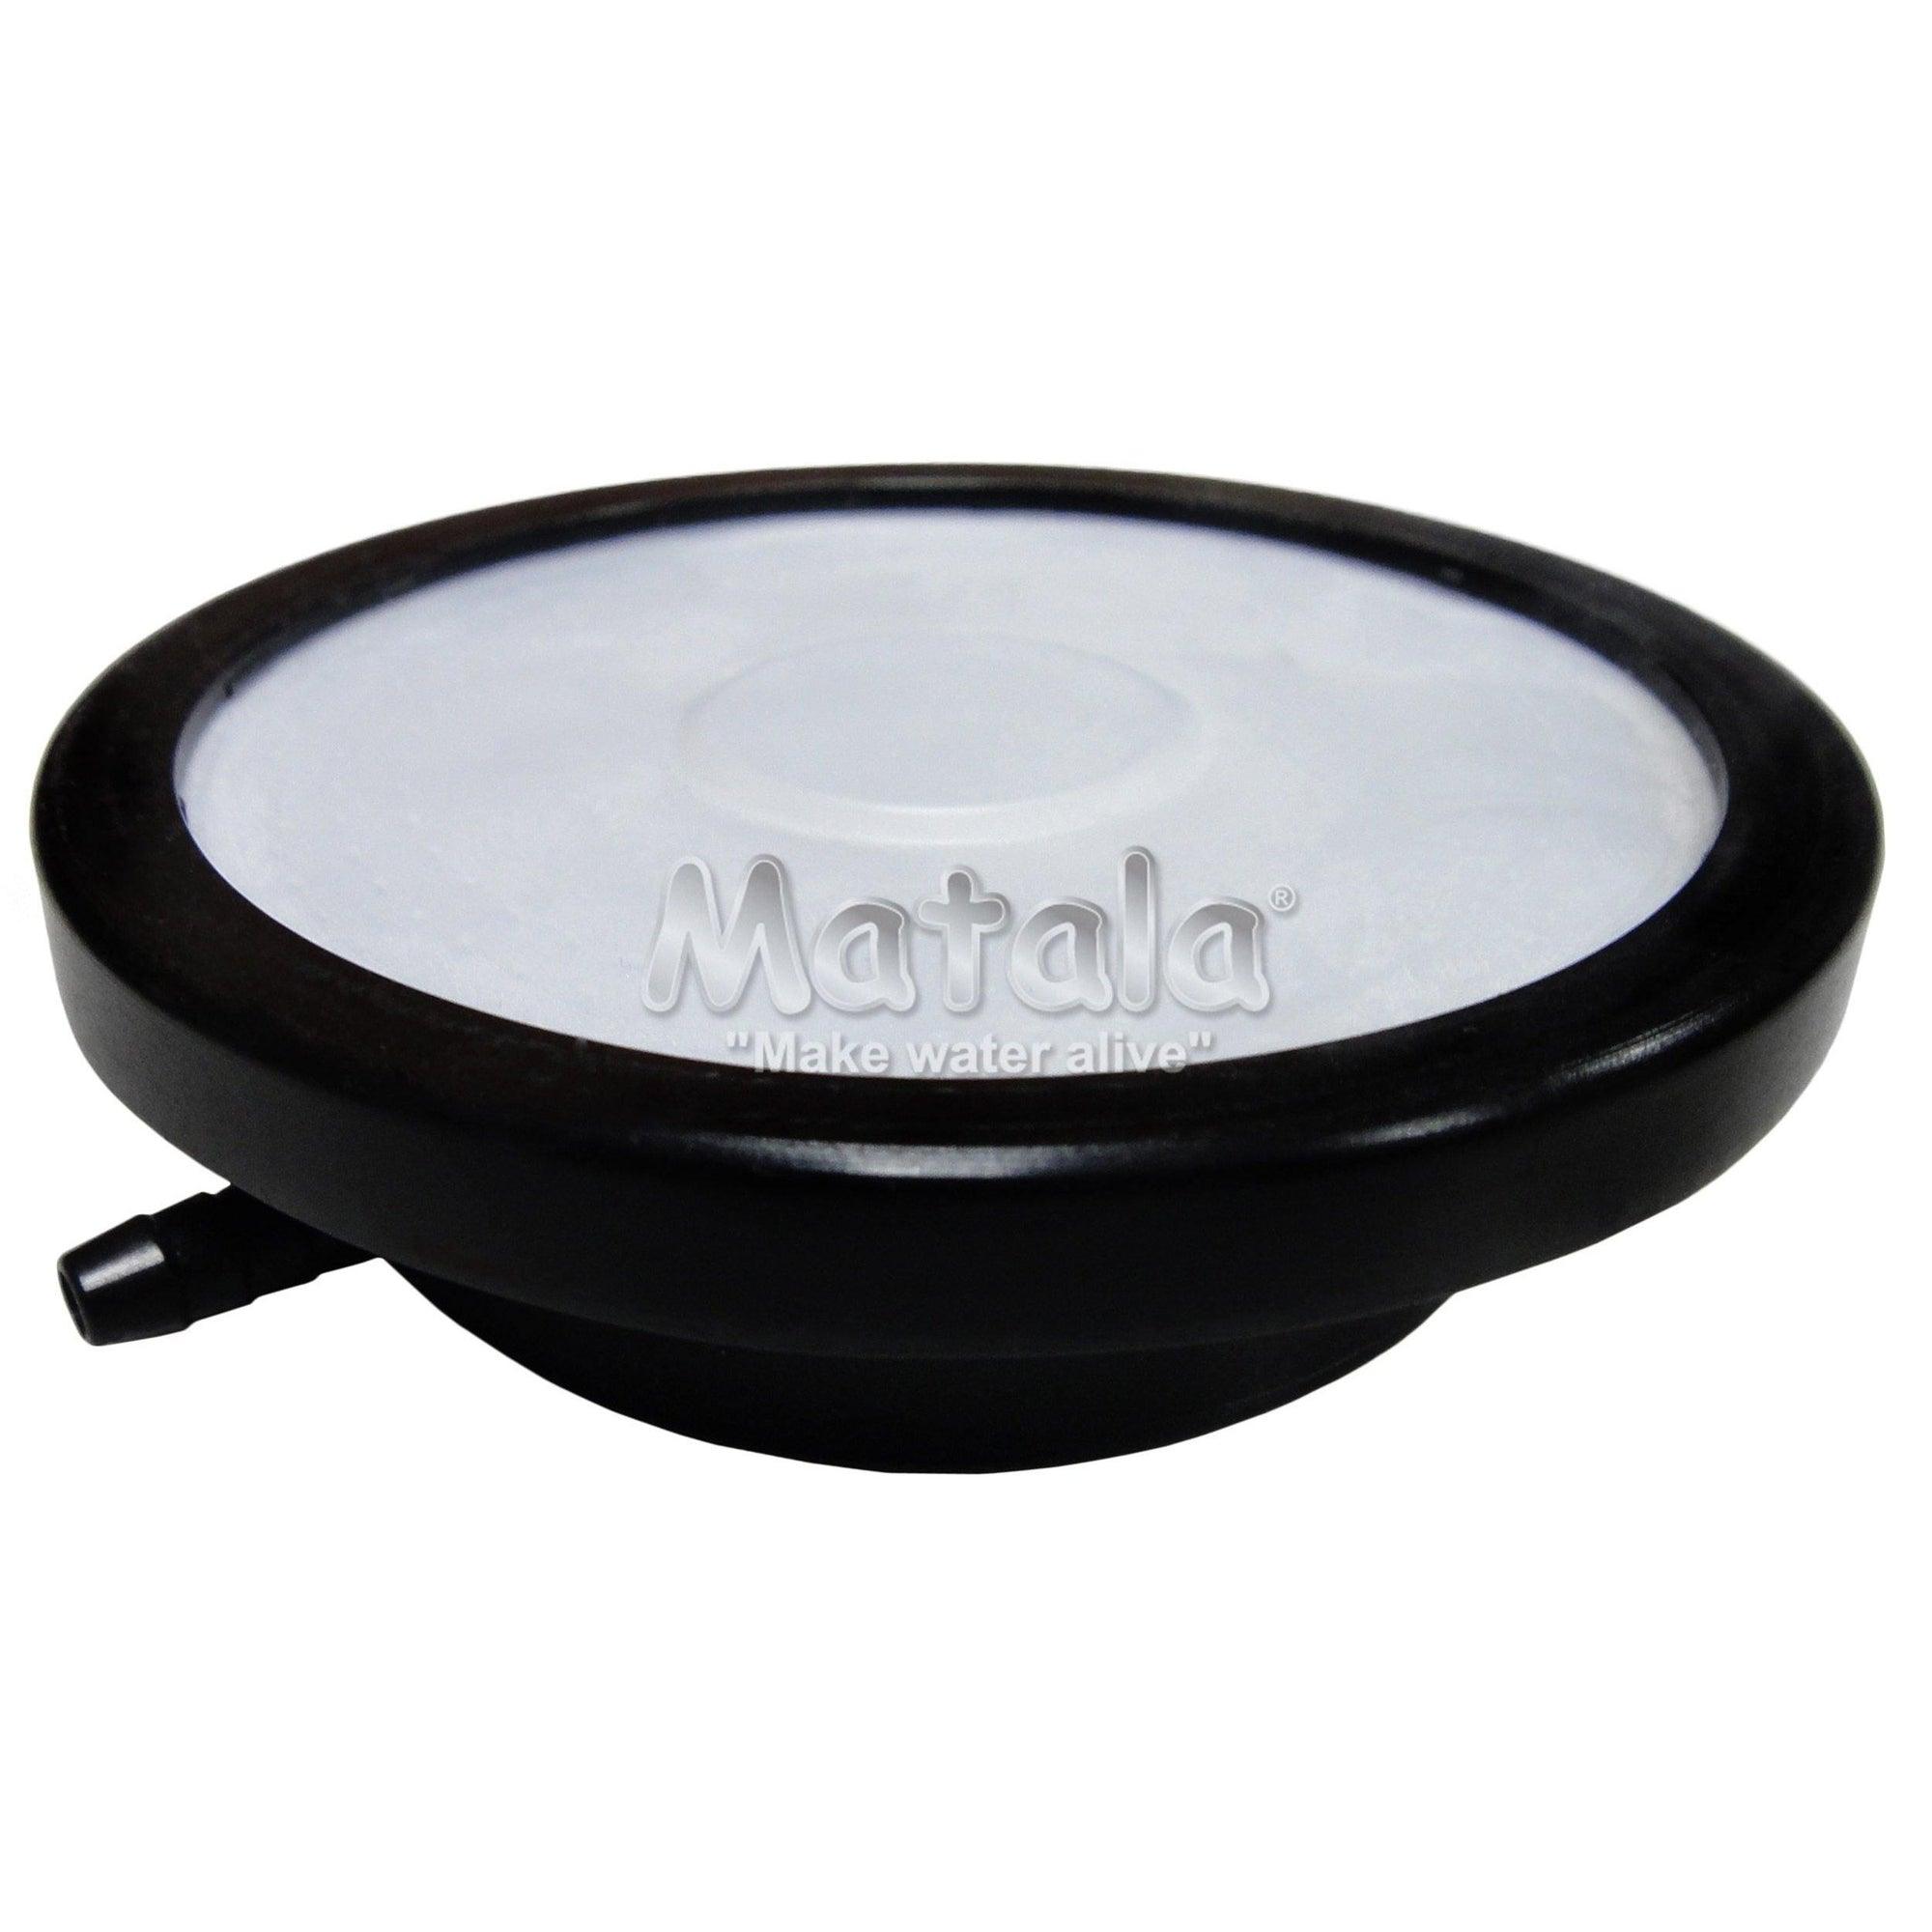 Matala Self-Weighted Air Diffuser Discs - Play It Koi